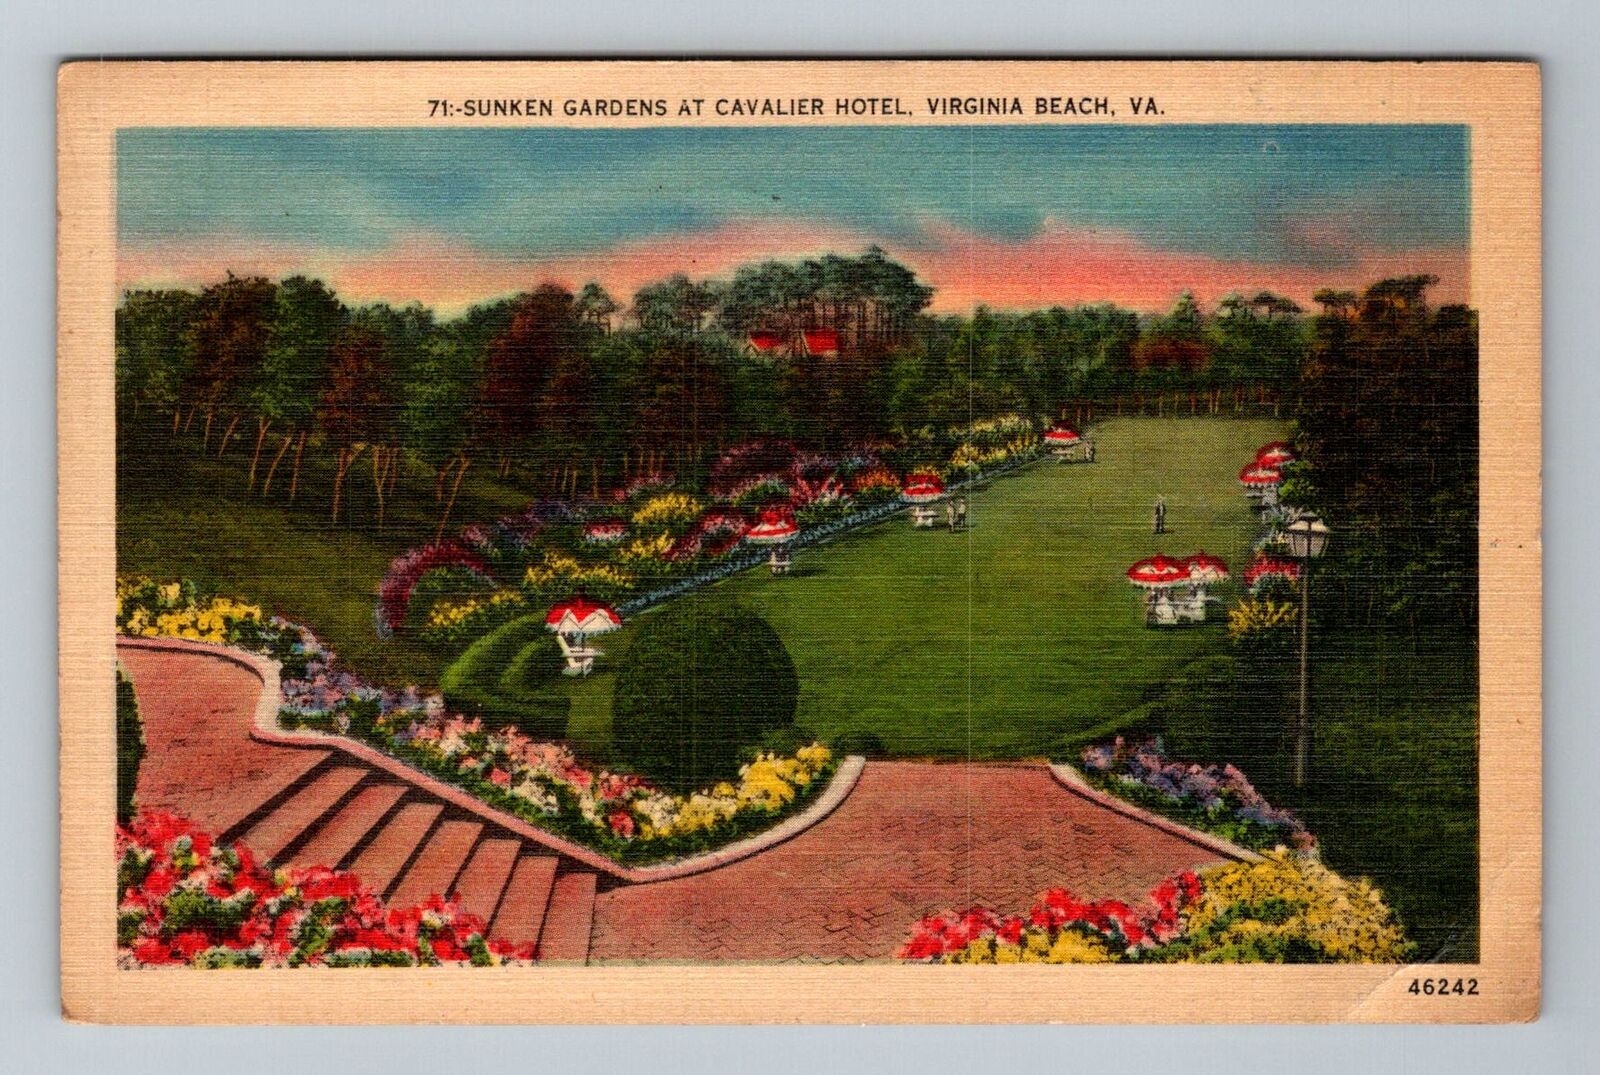 Virginia Beach VA-Virginia Cavalier Hotel Sunken Gardens Vintage c1948 Postcard